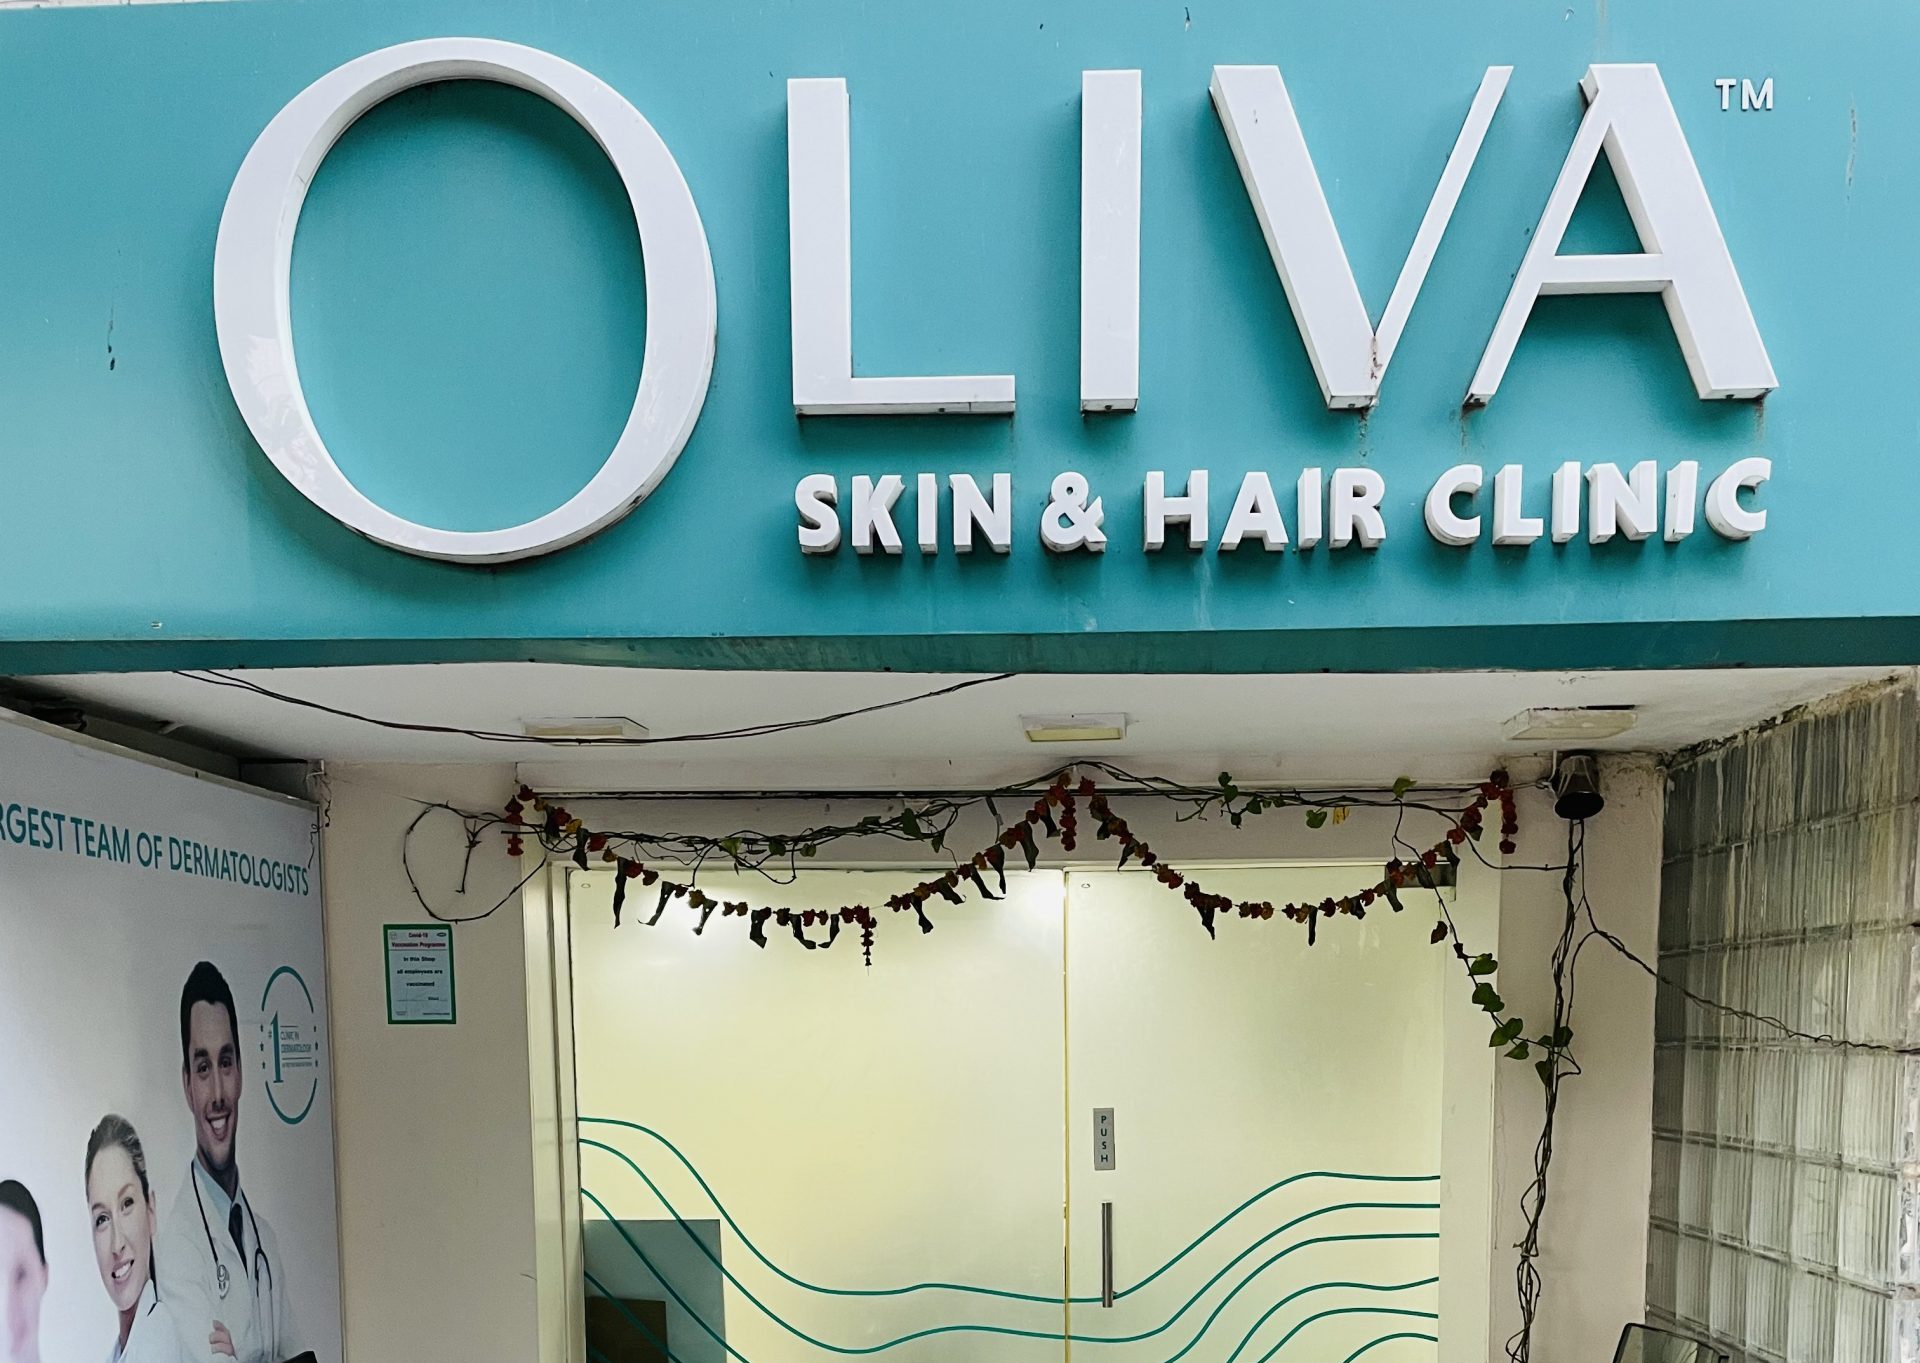 OLIVA-Skin & Hair Clinic, Pune; Archinova Design Pvt. Ltd